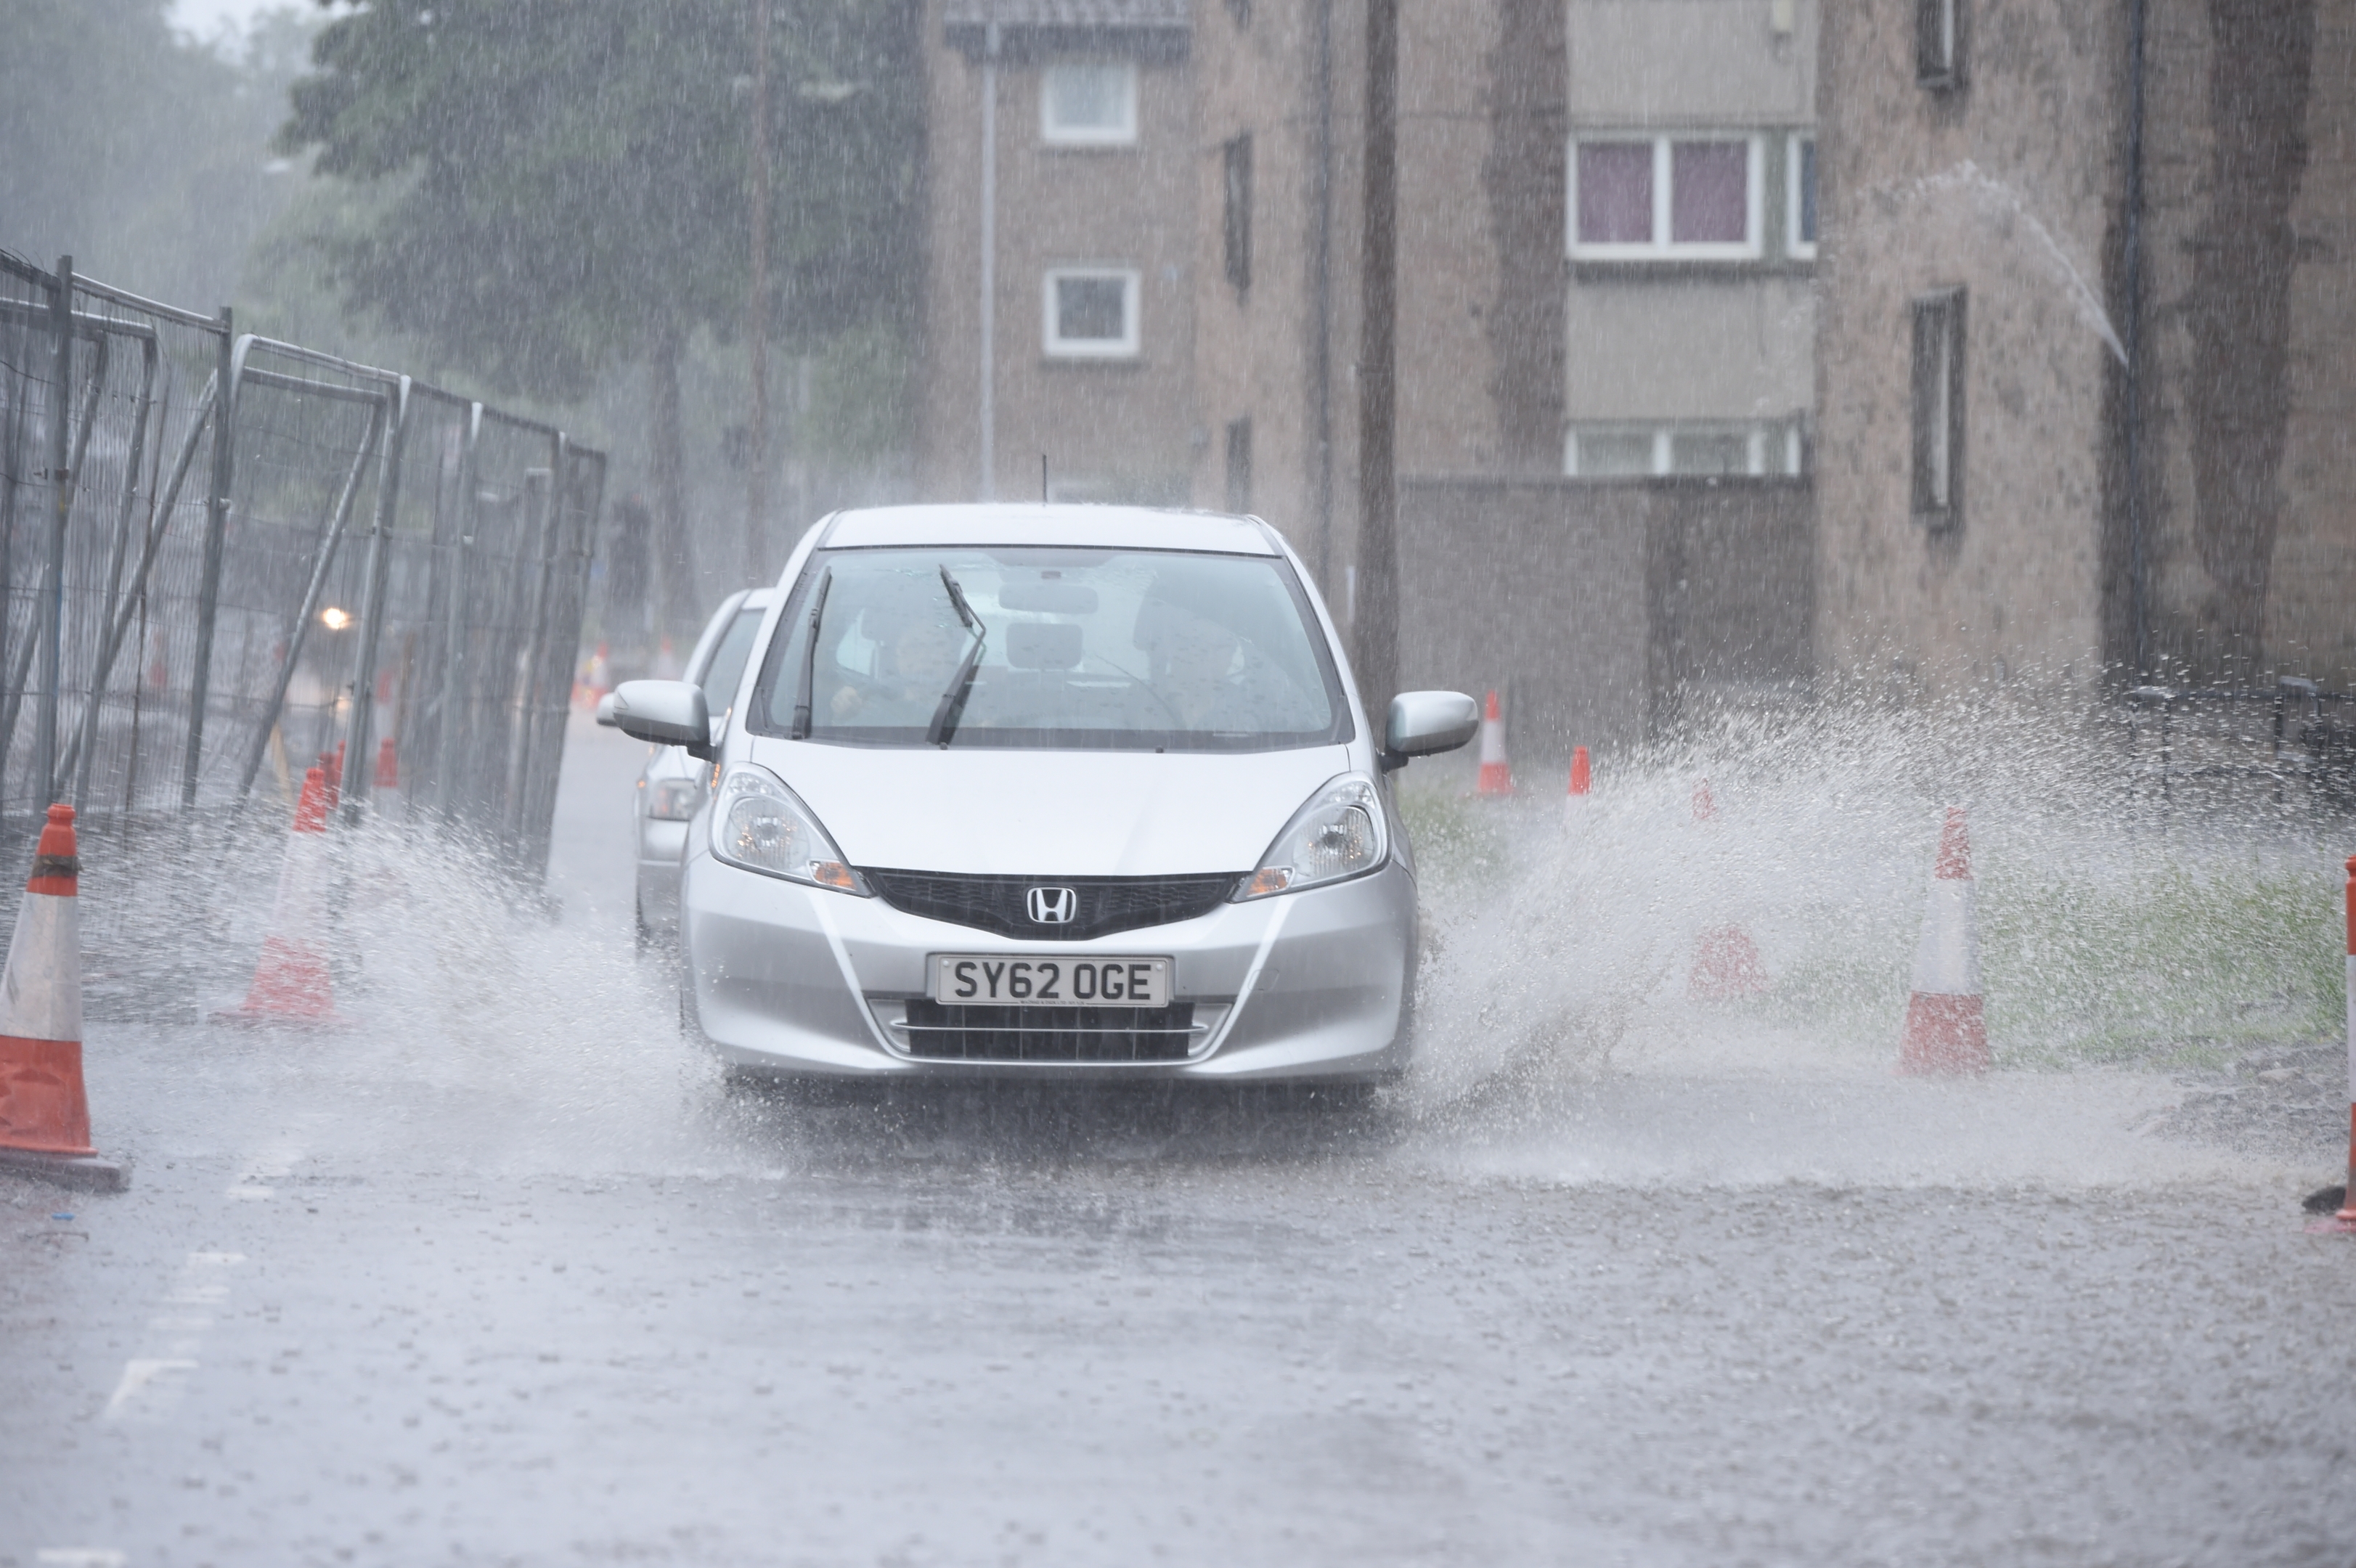 Cars battle their way through the city floods 